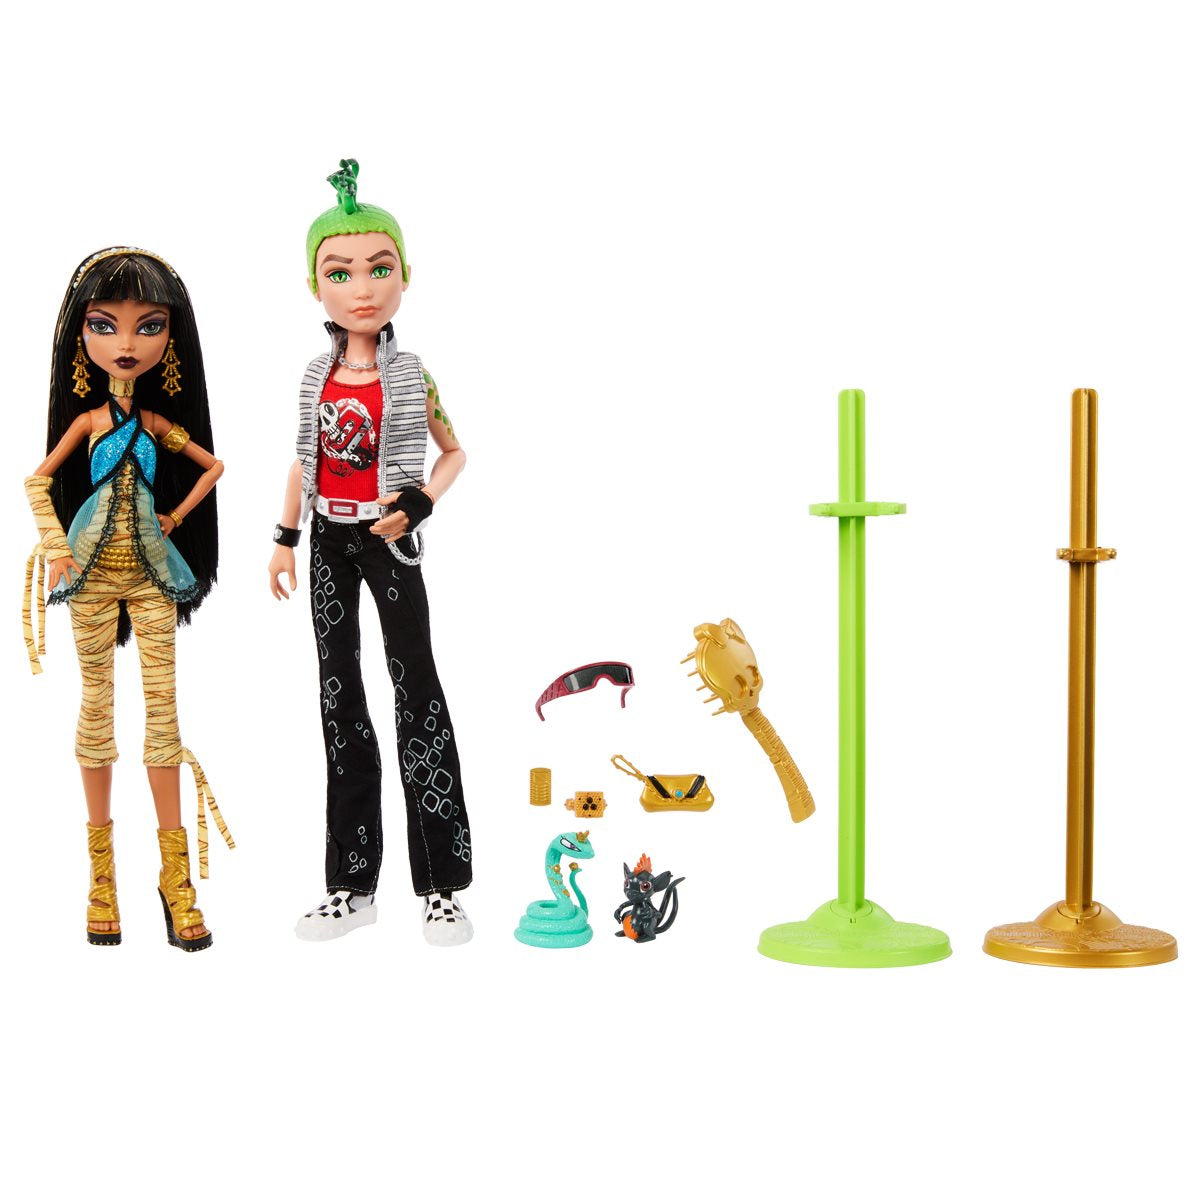 Booriginal Creeproduction Cleo De Nile and Deuce Gorgon Collectible Doll Set (Pre-Order)